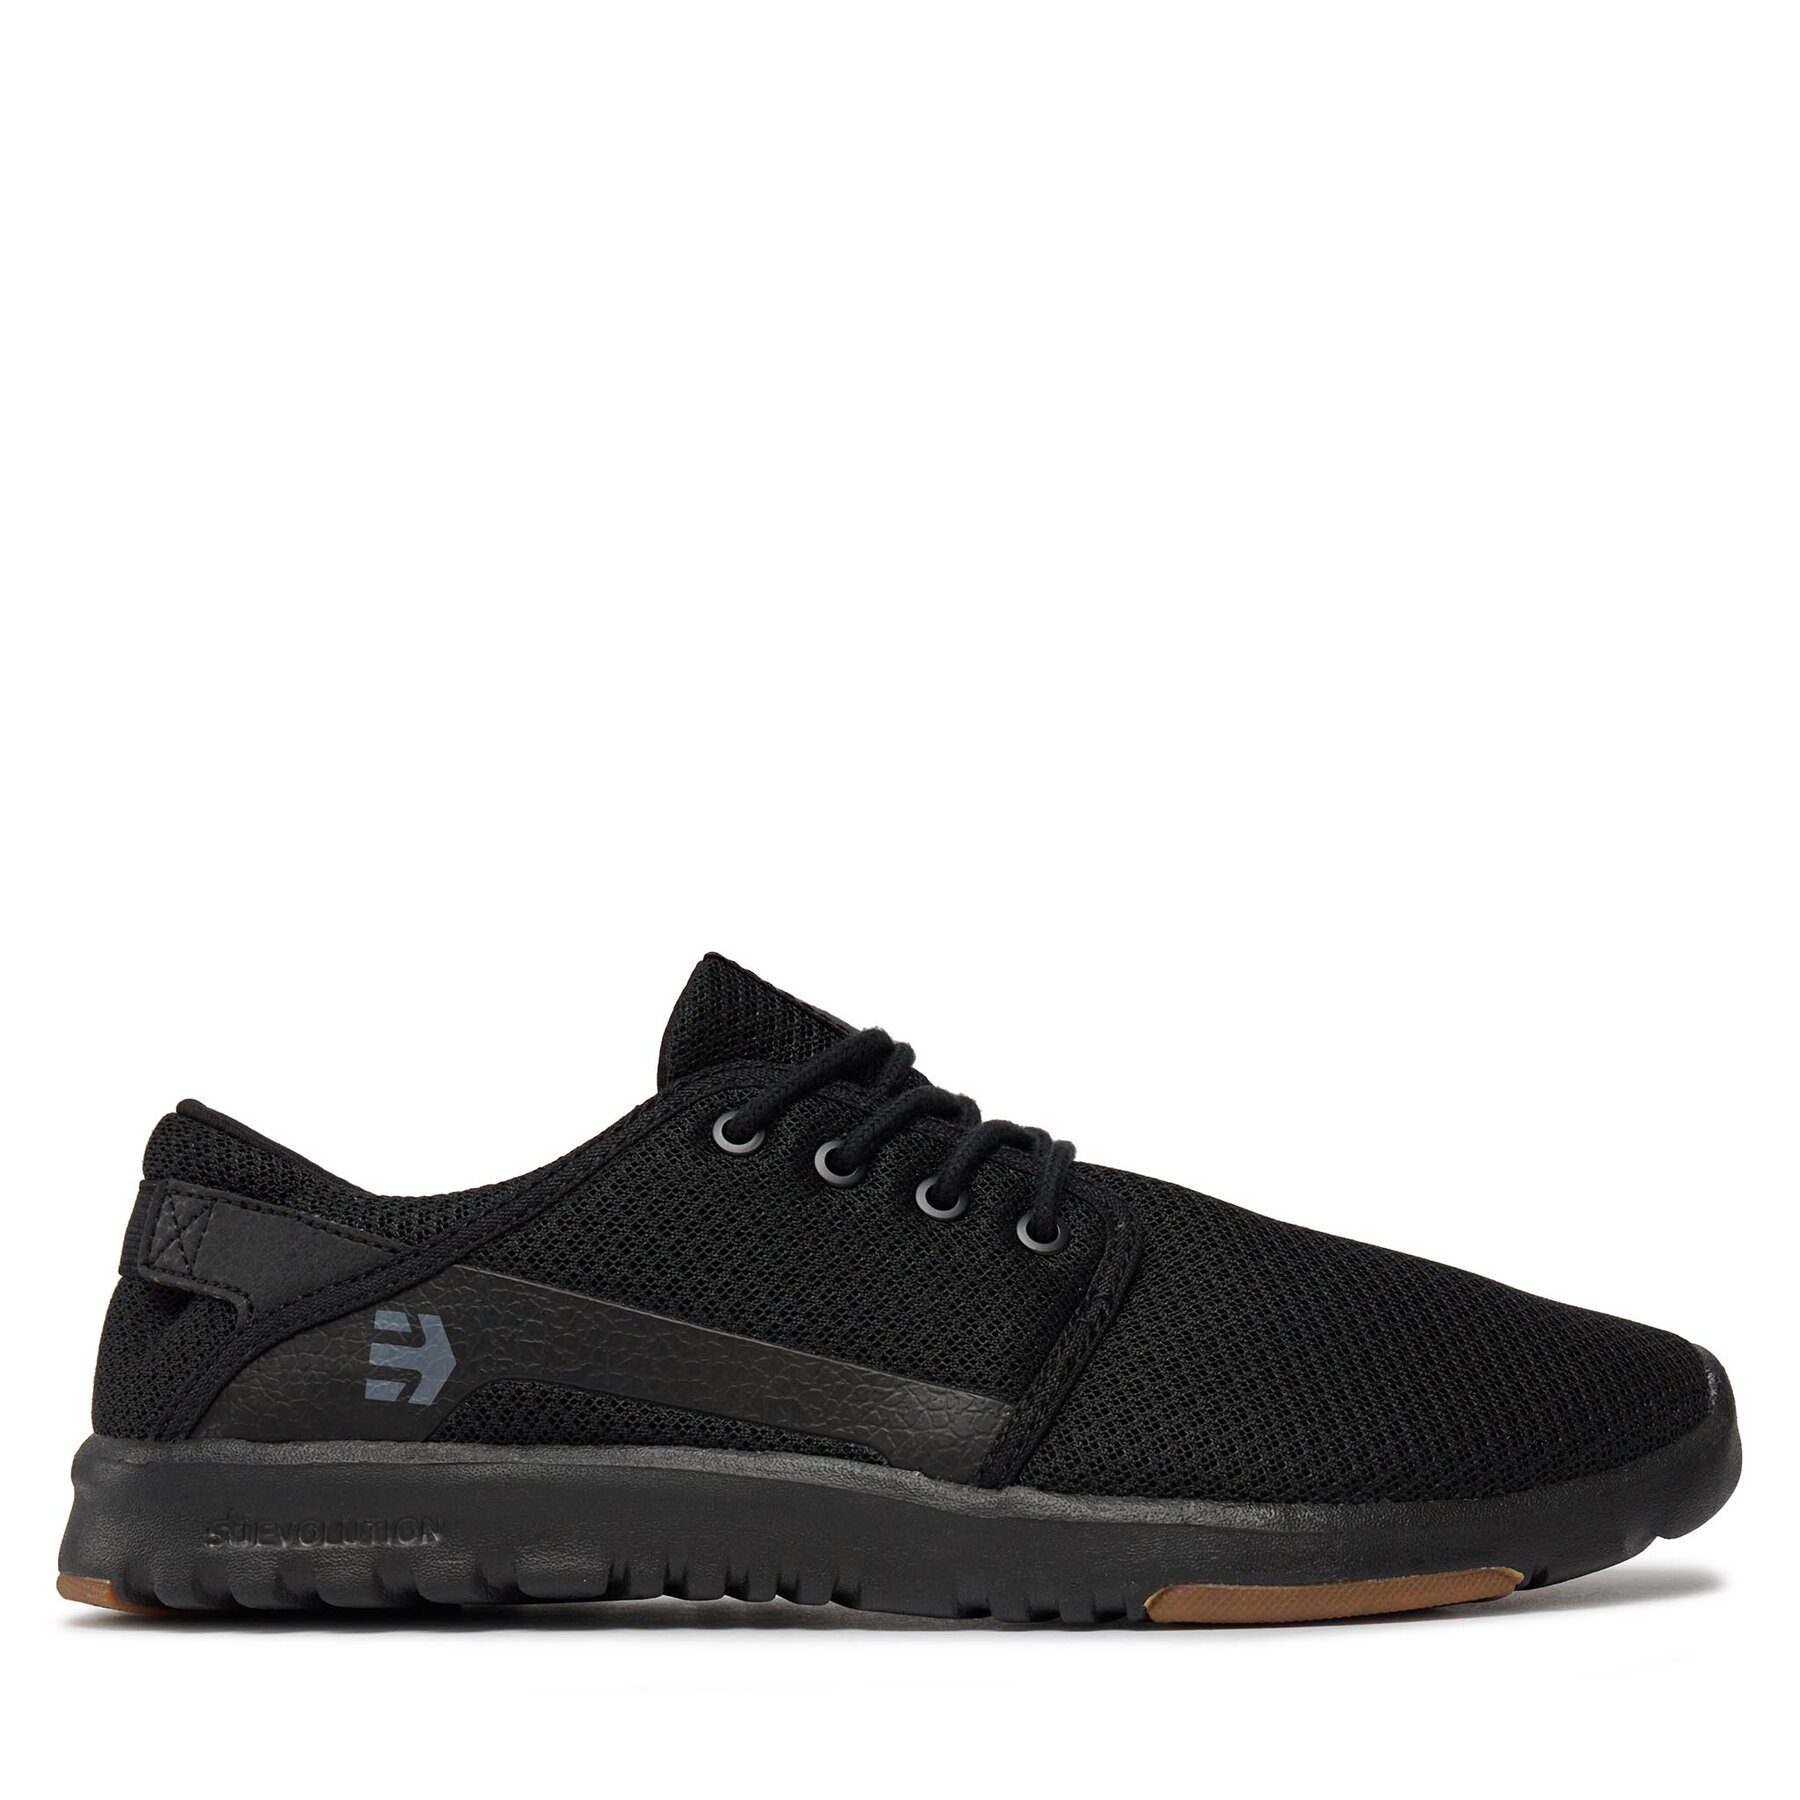 Sneakers Etnies Scout 4101000419 Black/Black/Gum 544 von Etnies